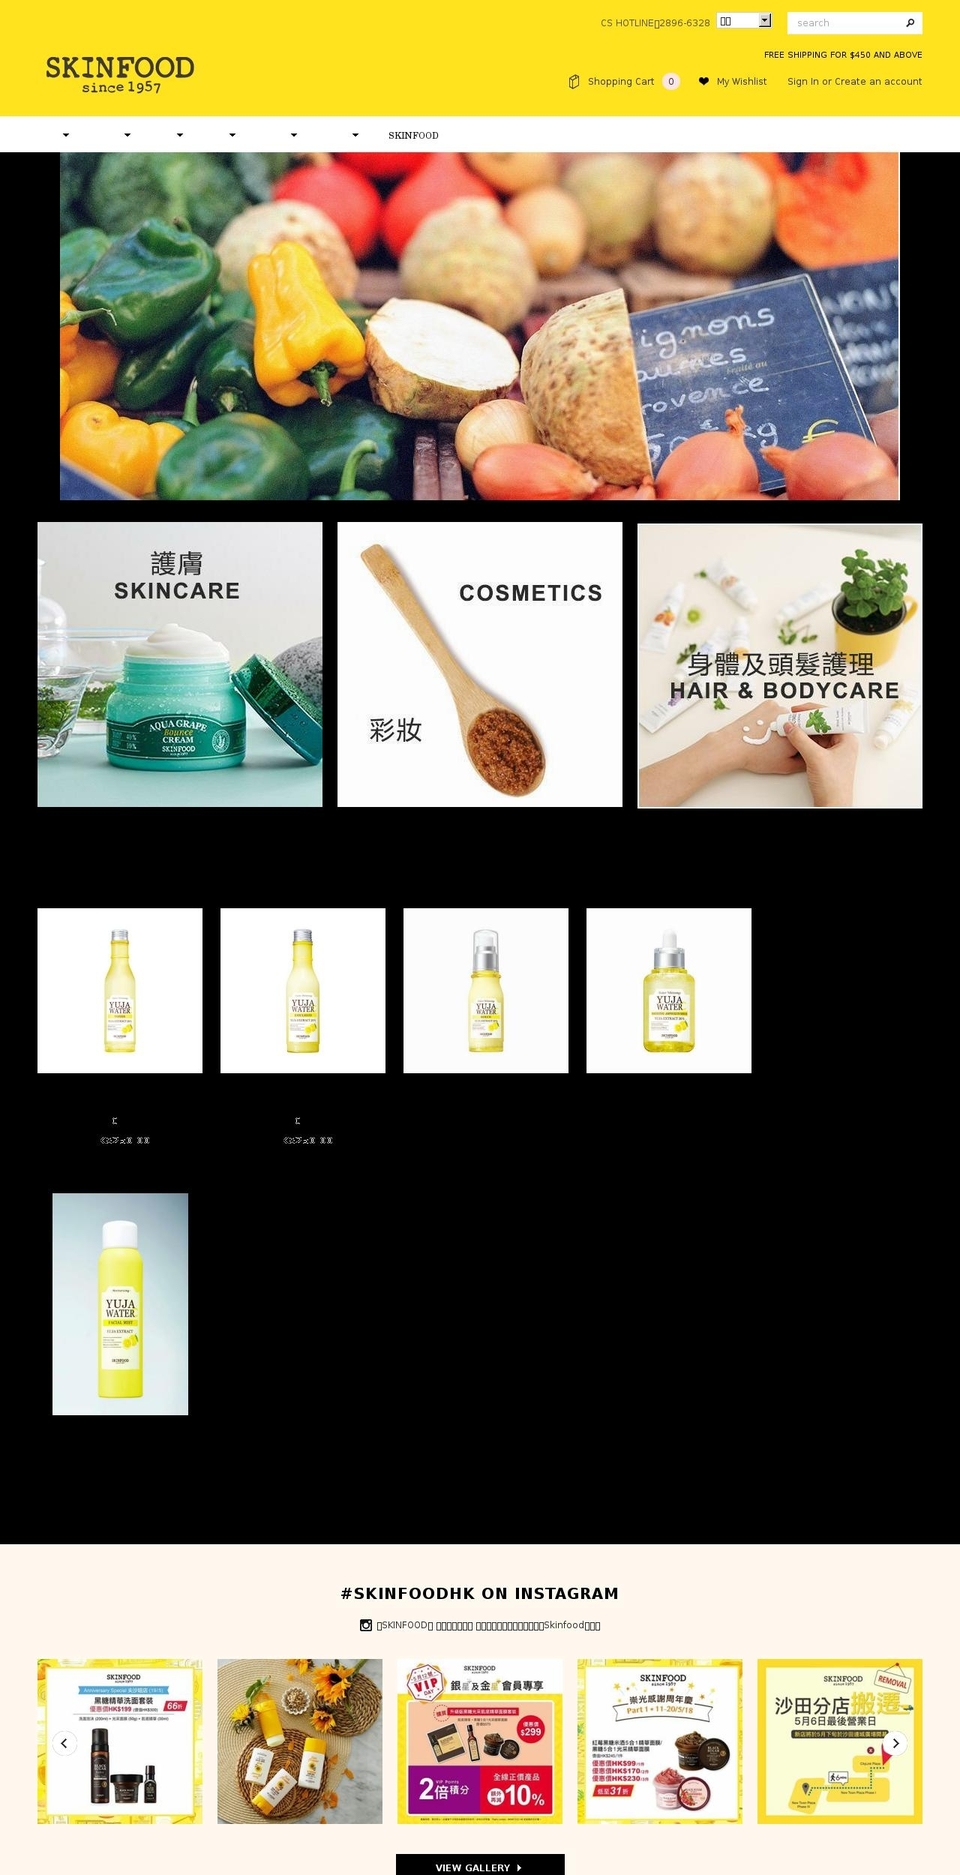 skinfood.com.hk shopify website screenshot